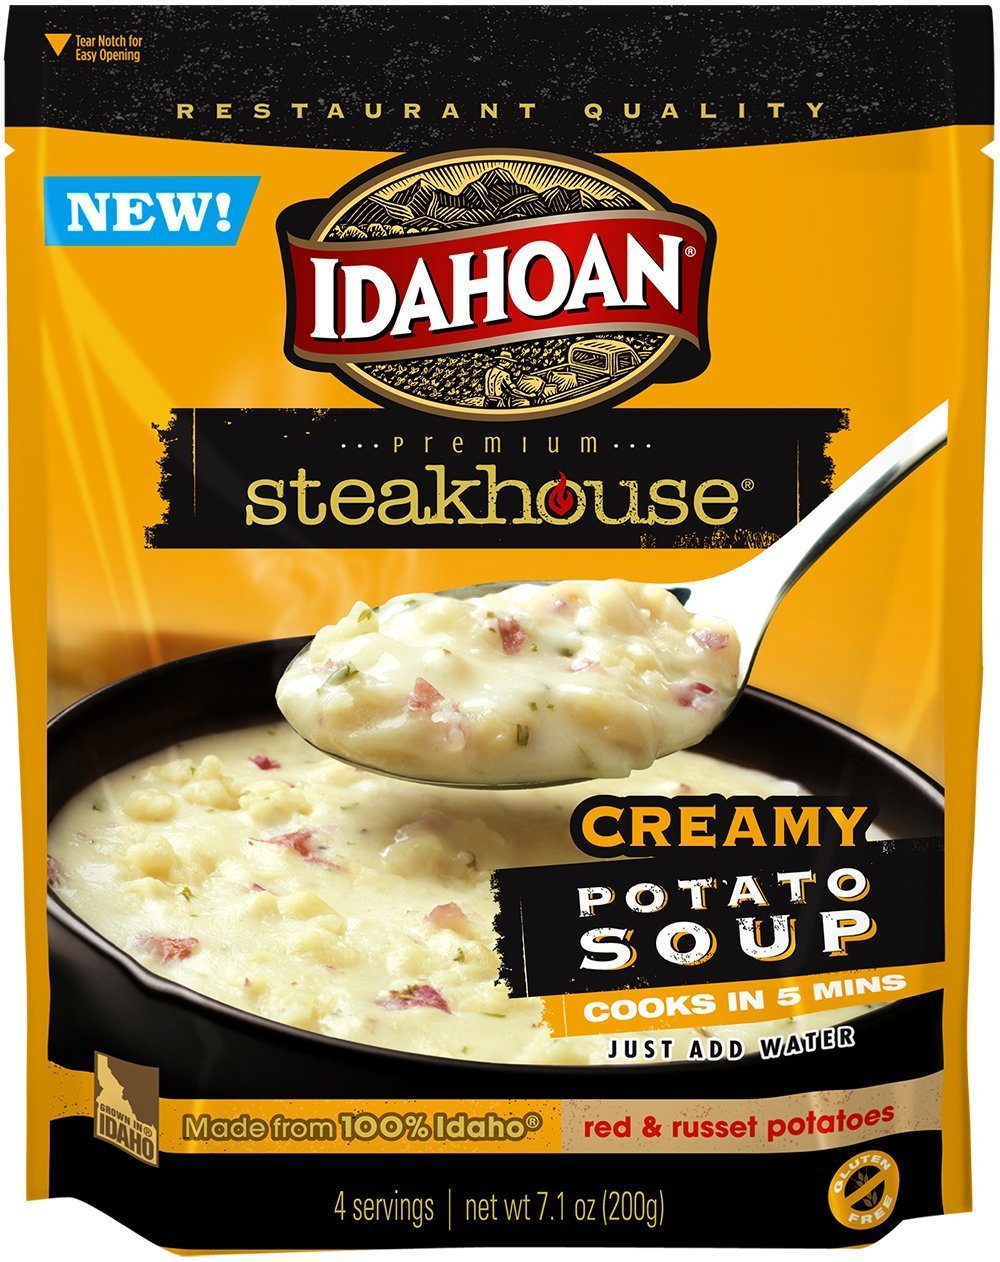 Idahoan Steakhouse potato soup